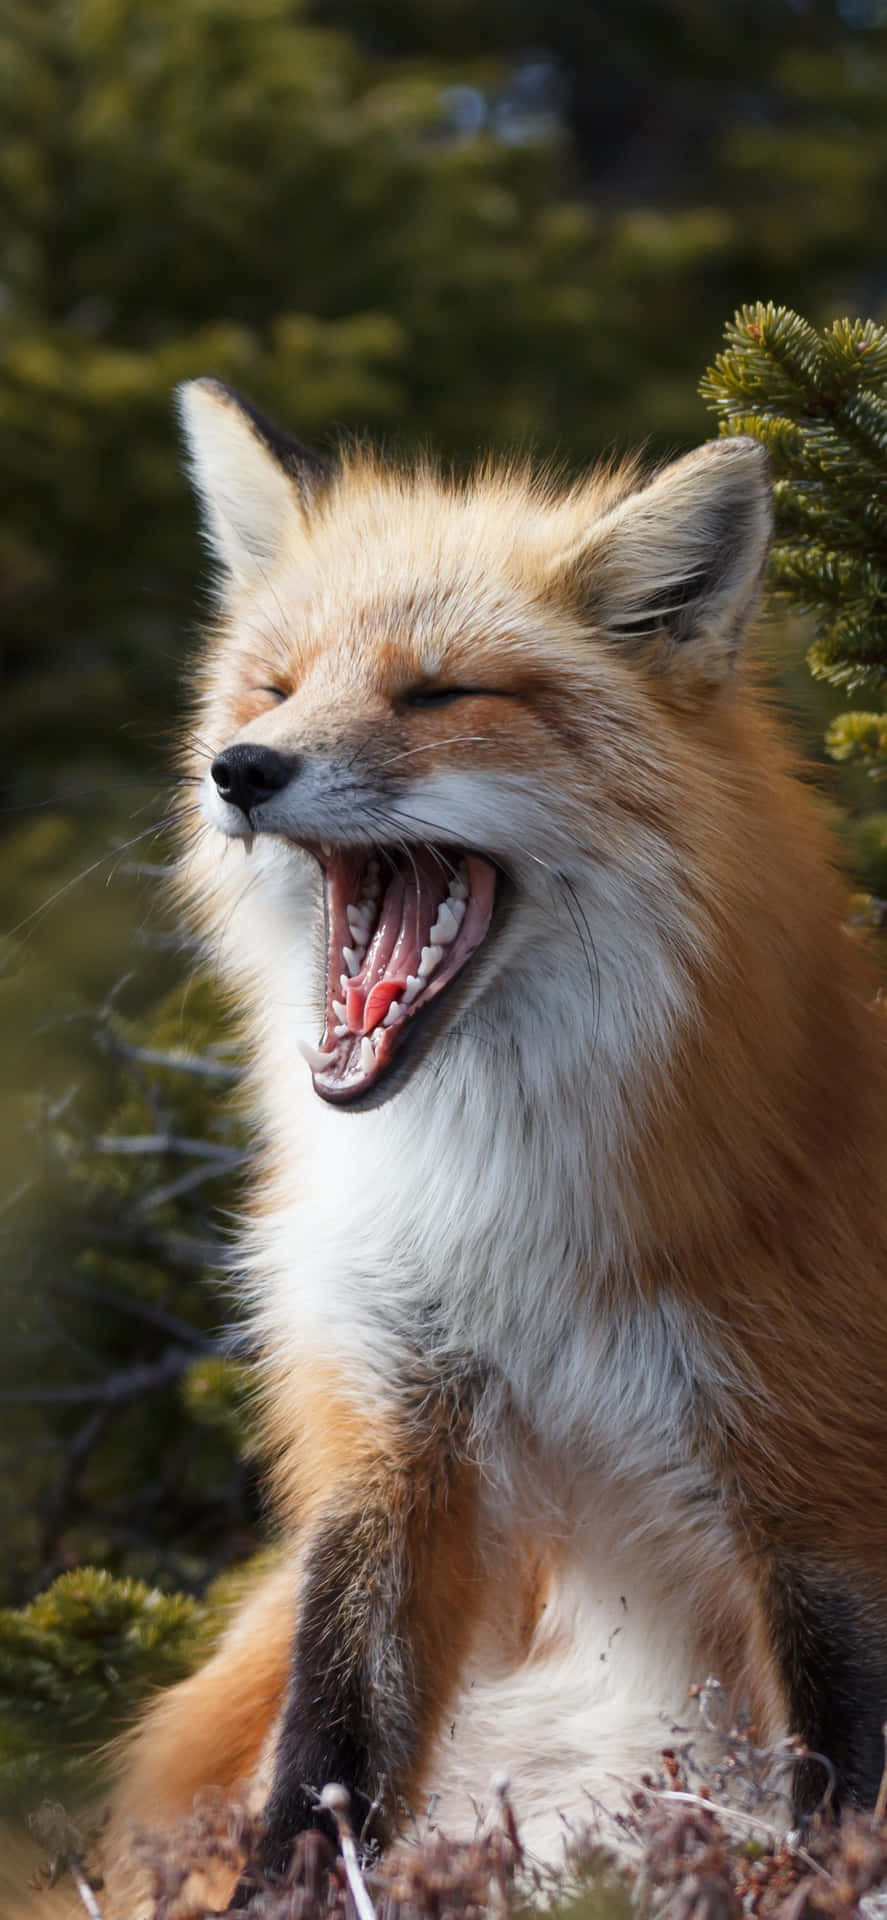 Adorable Red Fox saying "Hello!"